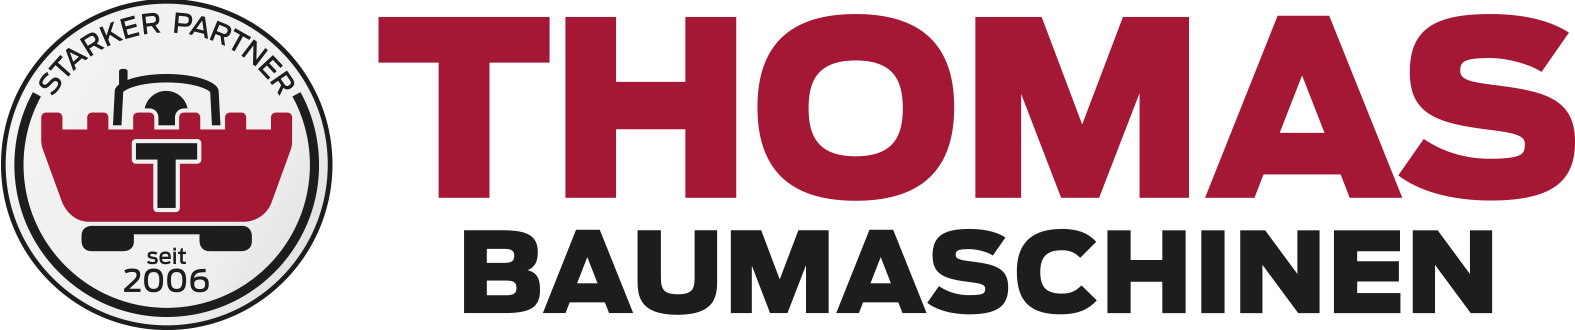 Thomas Baumaschinen logo